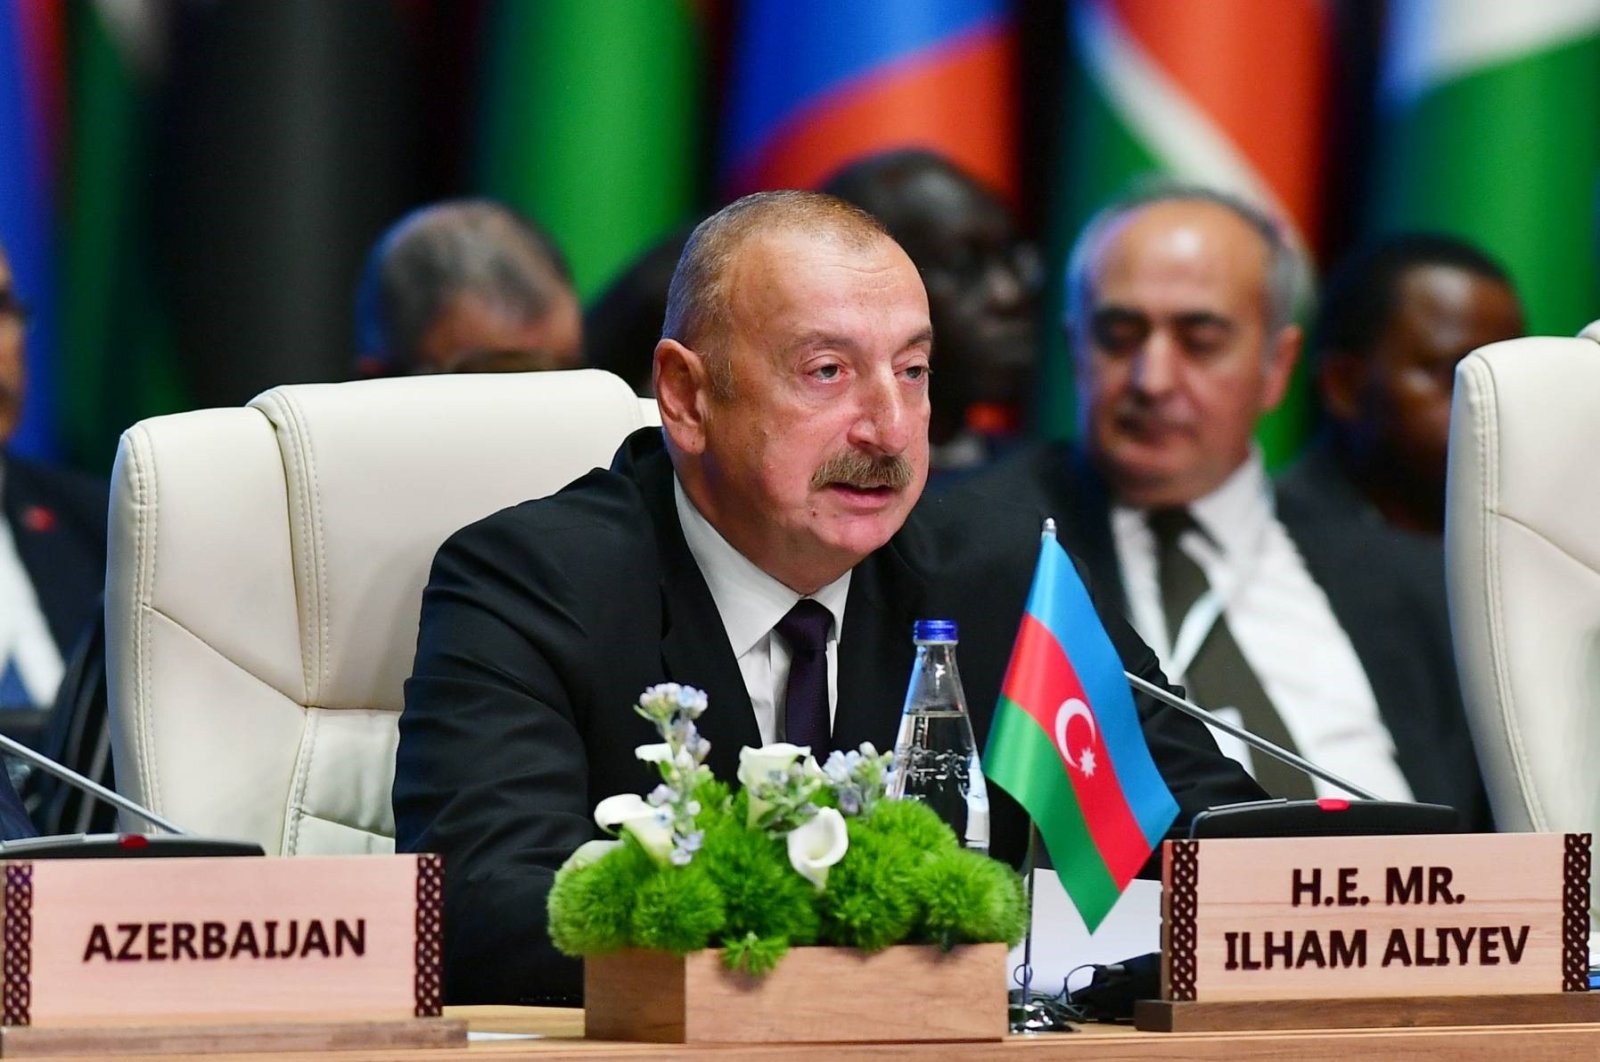 Azerbaijani President Aliyev speaks at a meeting of the Non-Aligned Movement in Baku, Azerbaijan, July 5, 2023. (IHA Photo)